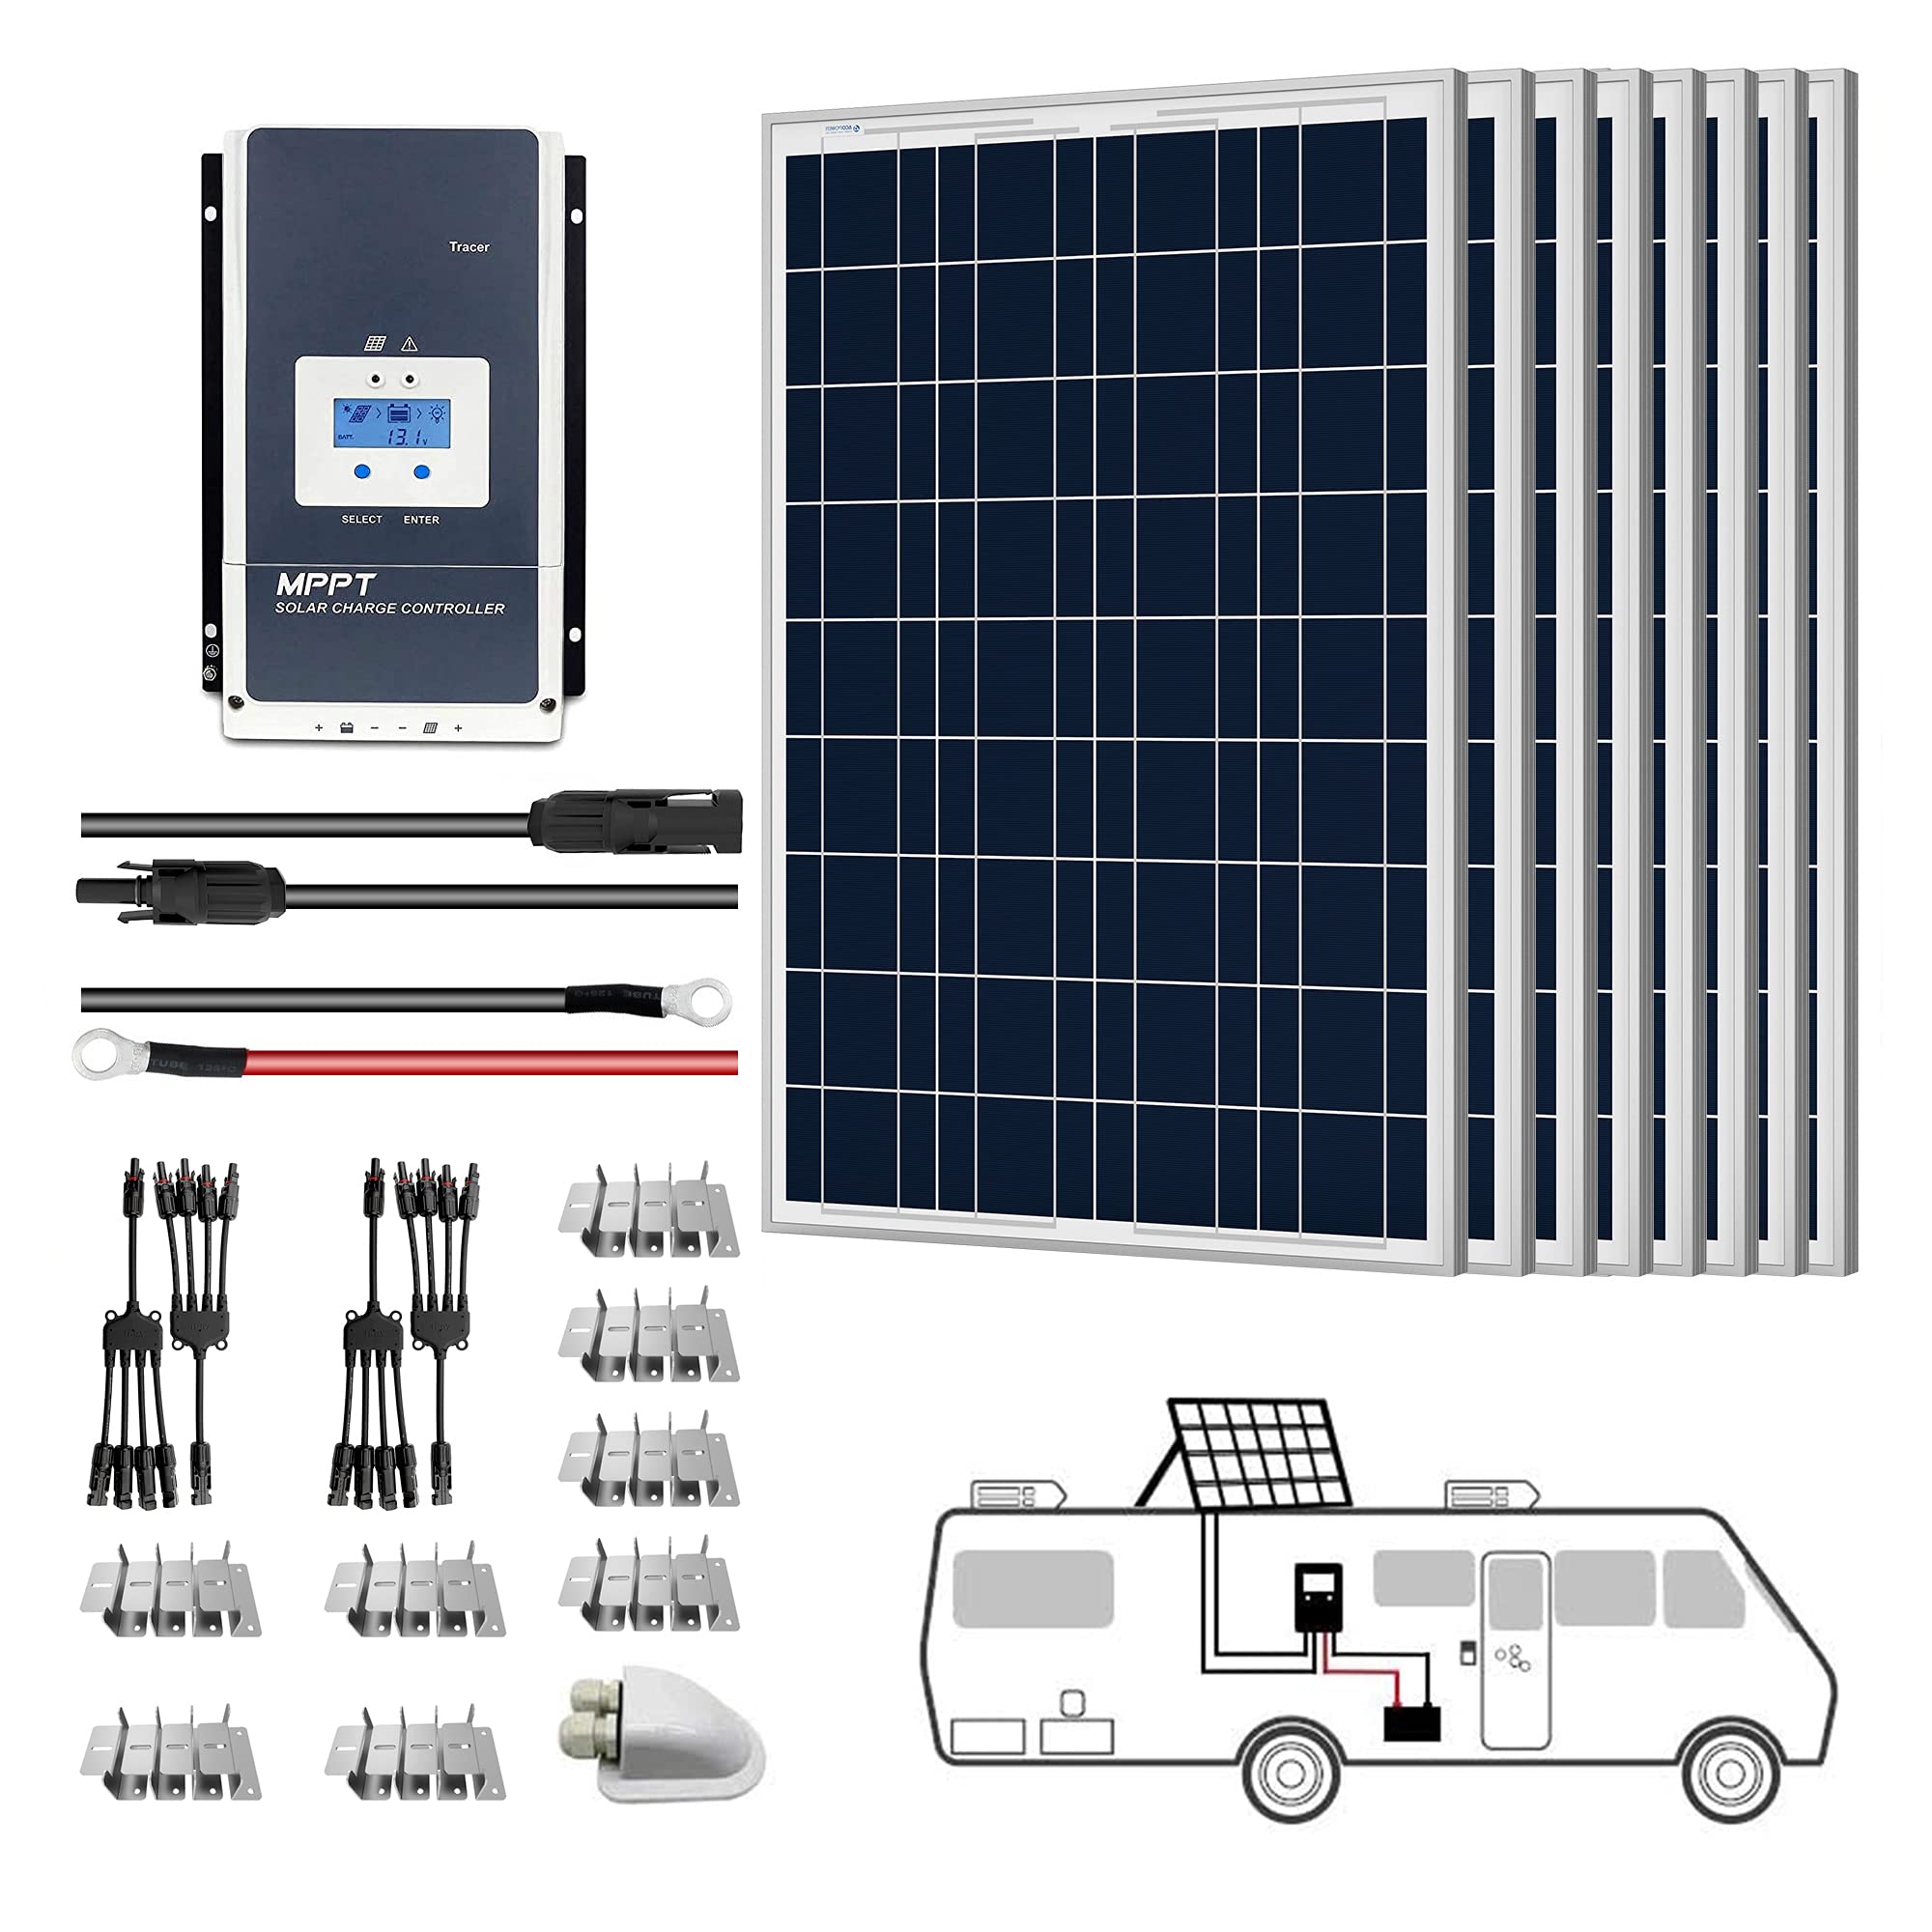 ACOPOWER 12V  Polycrystalline Solar RV Kits + MPPT / PWM Charge Controller